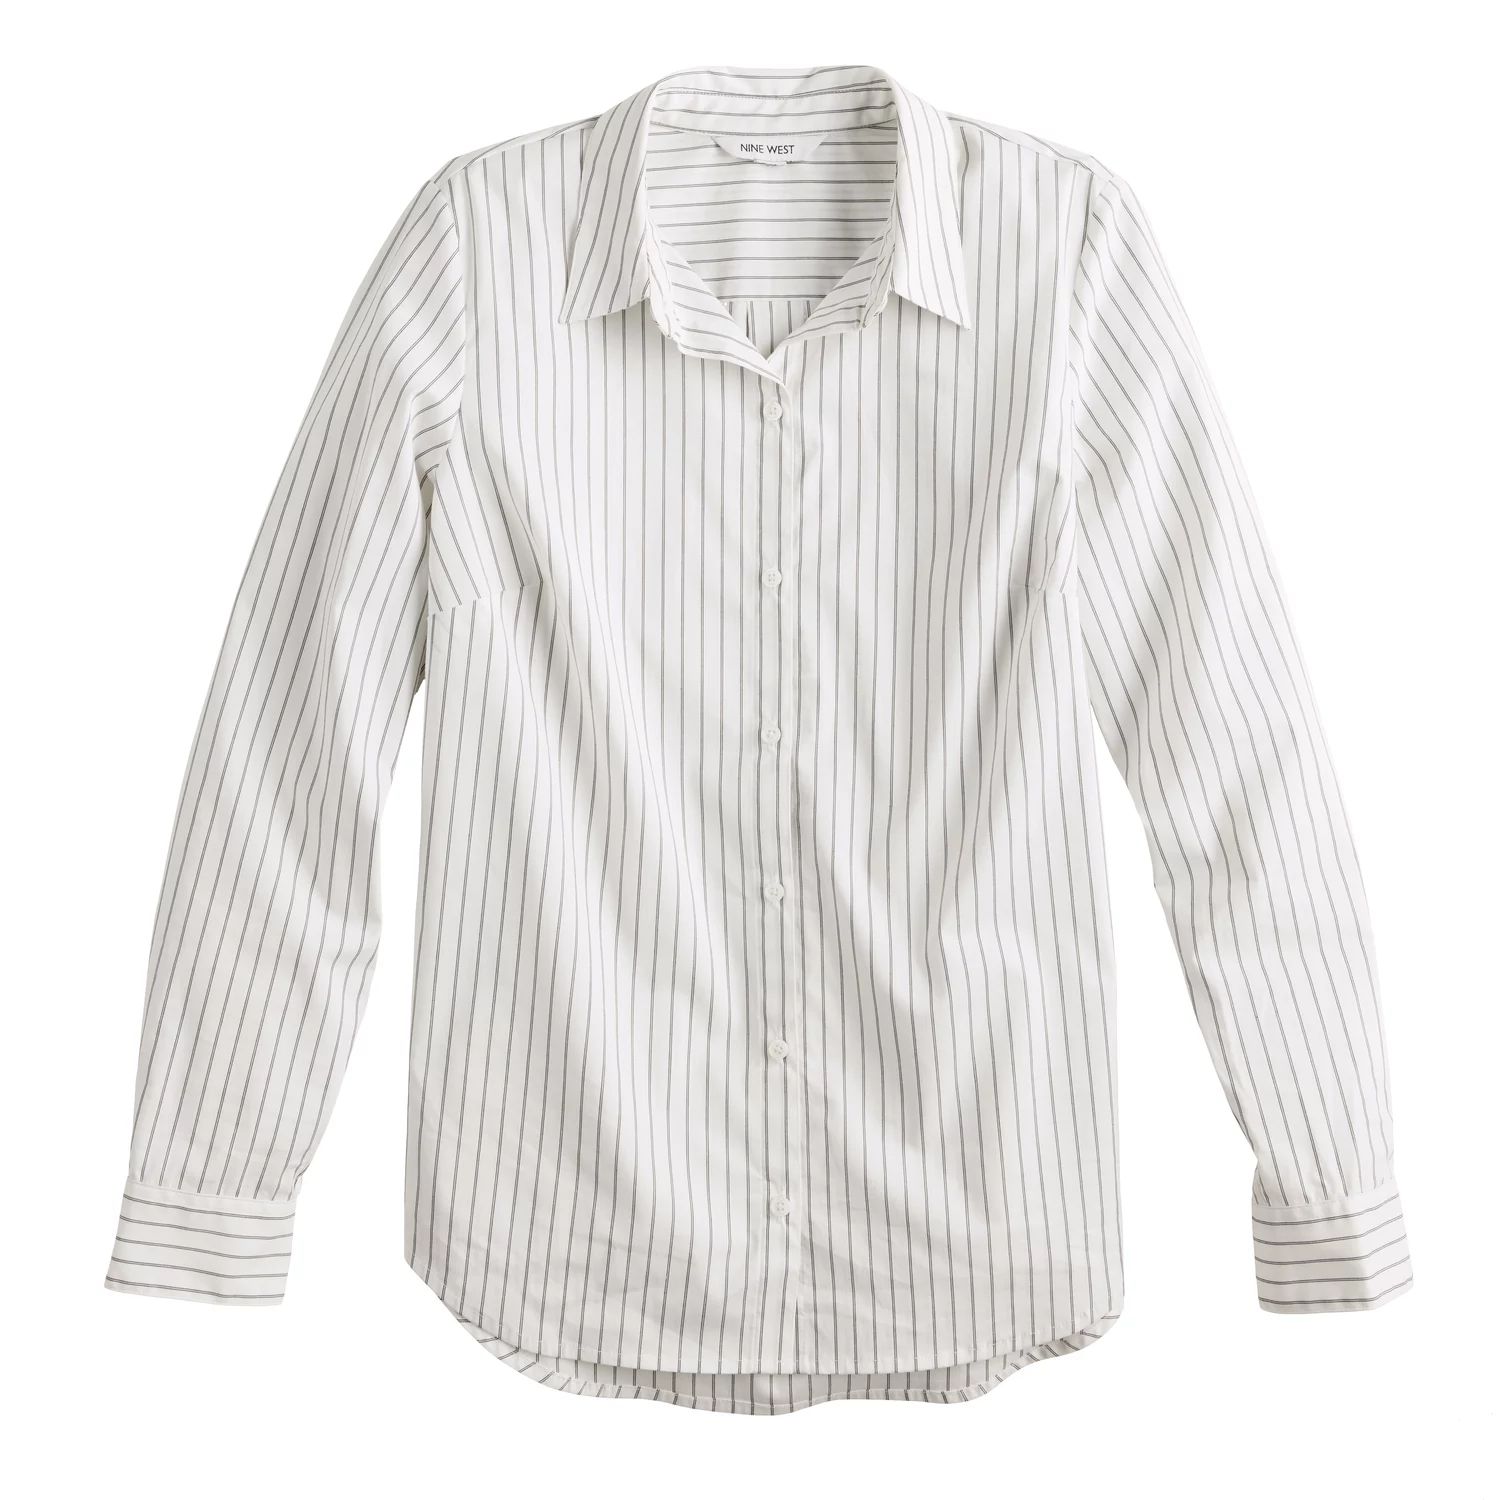 Женская структурированная рубашка на пуговицах с длинными рукавами Nine West Nine West топ с длинными рукавами nmmalina stripe top noisy may цвет black stripes white stripes